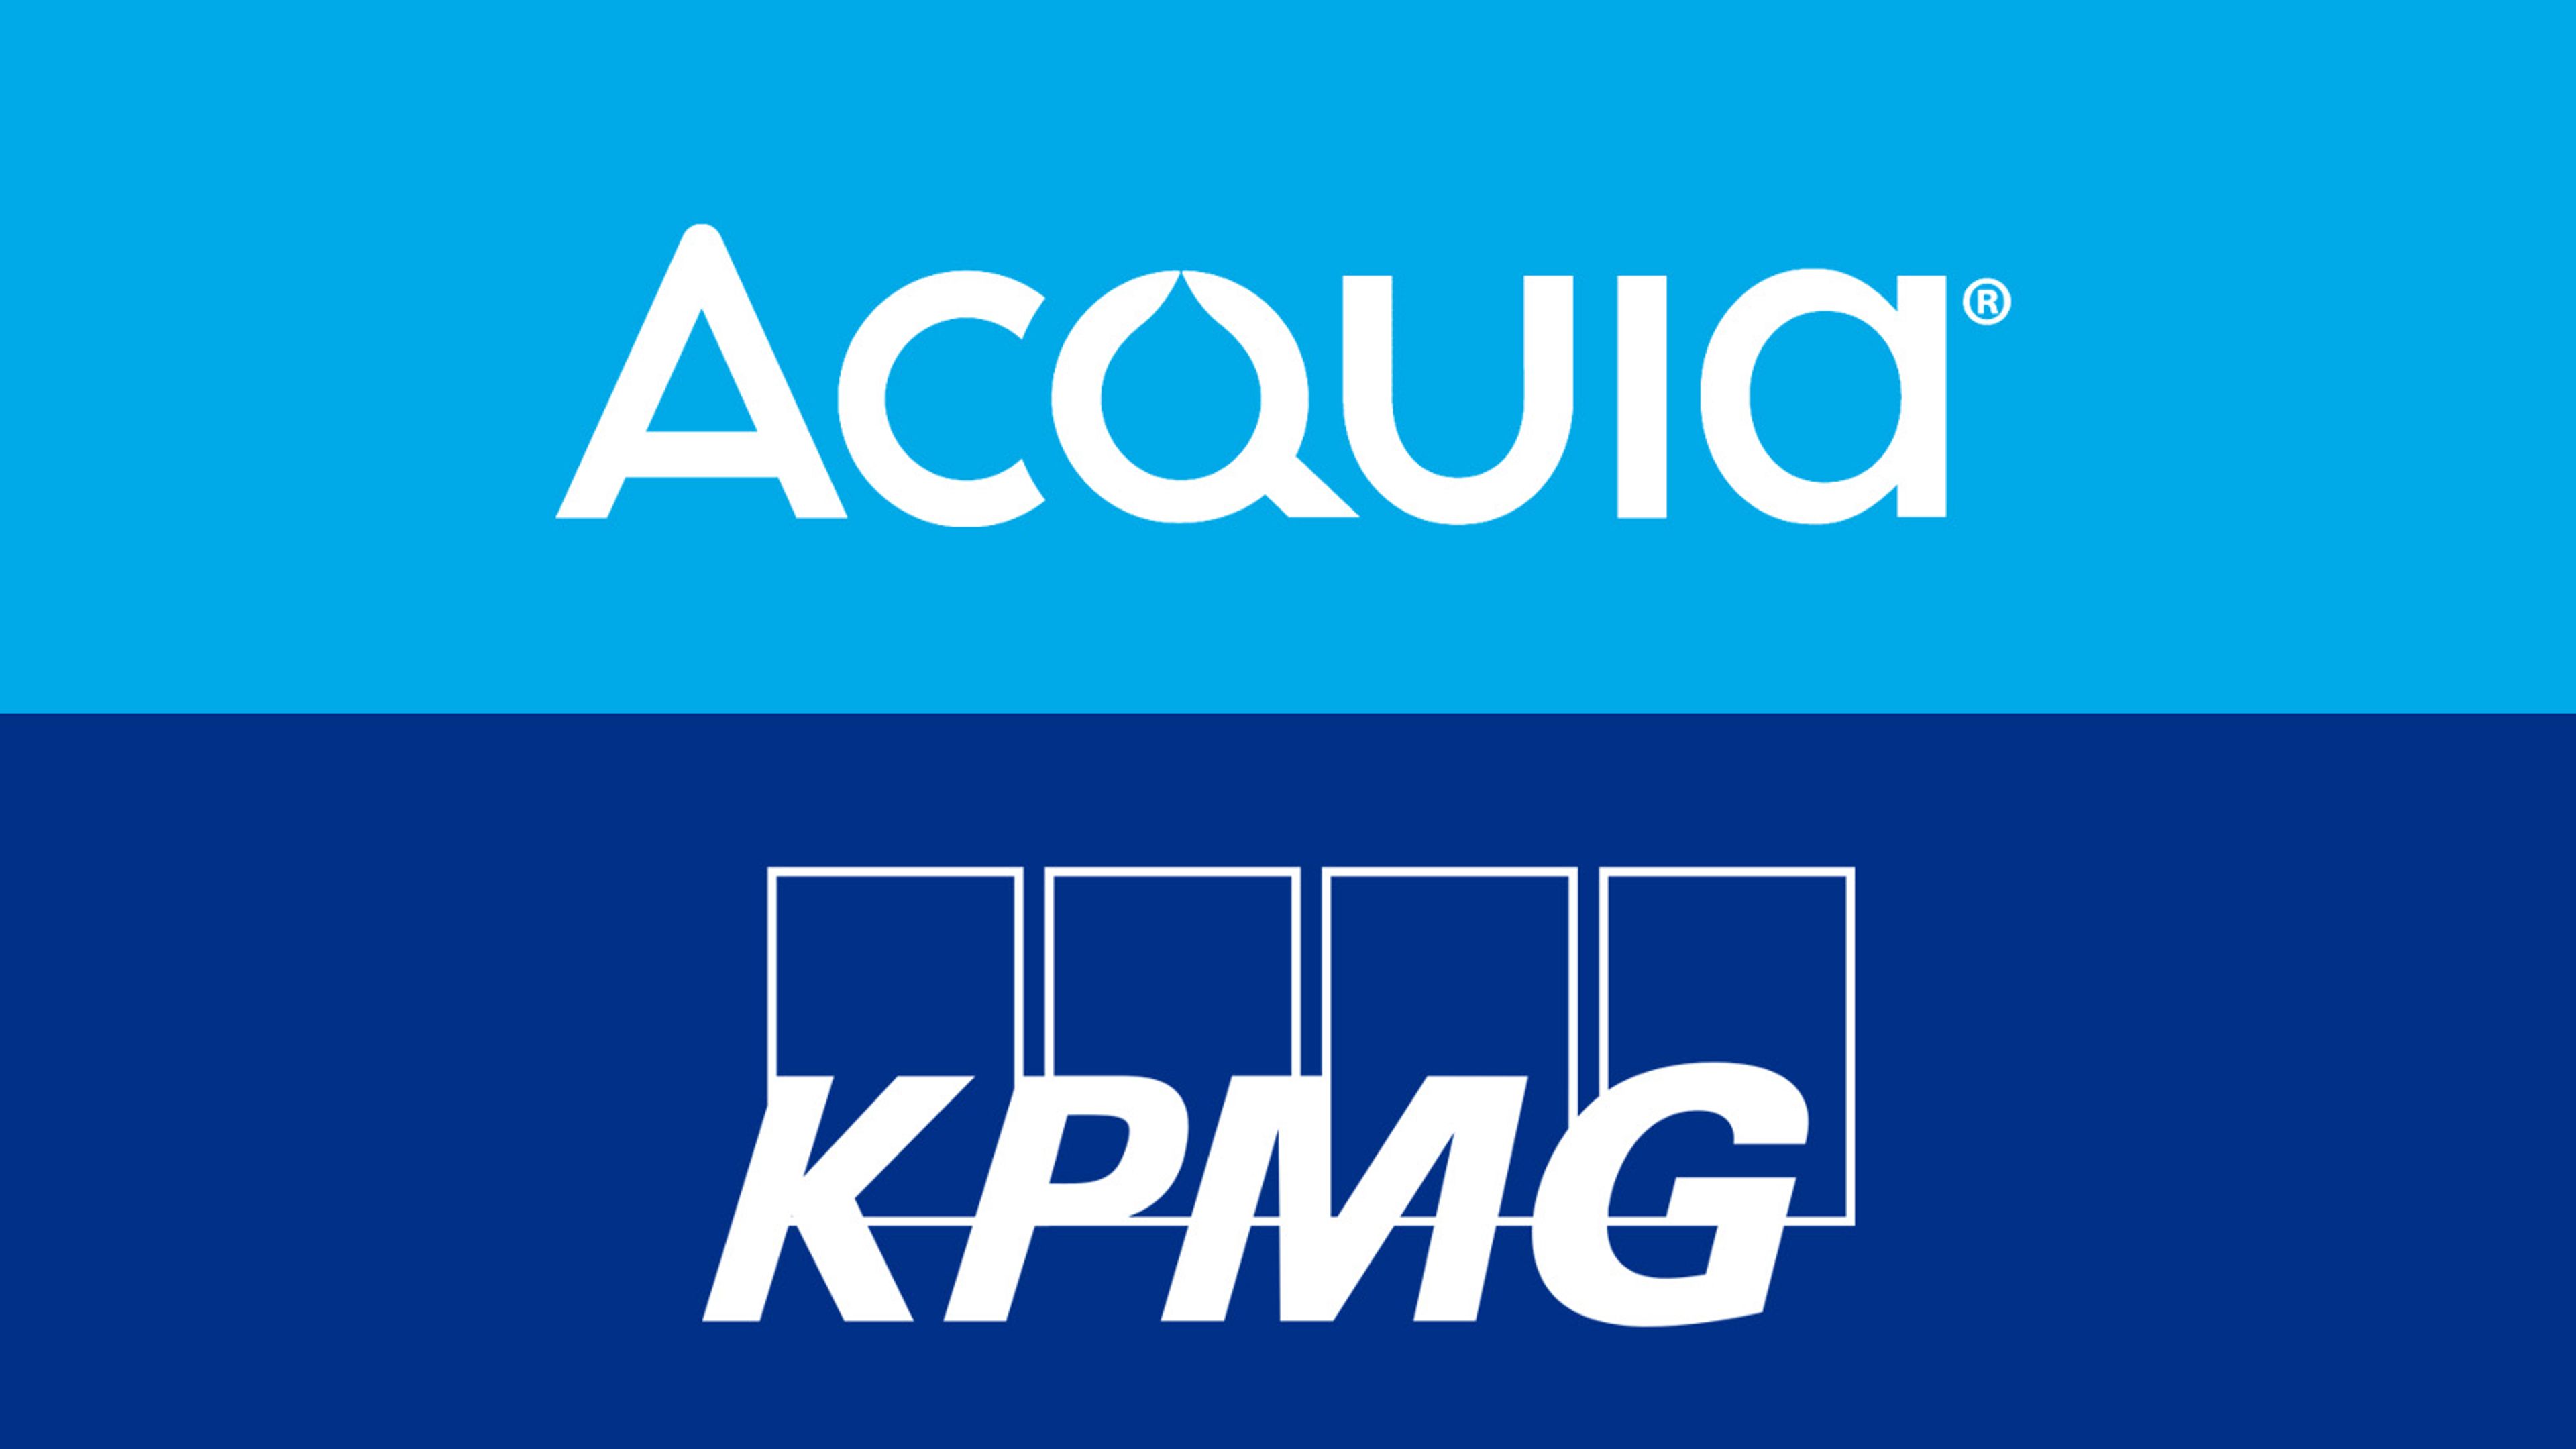 Acquia and KPMG logos